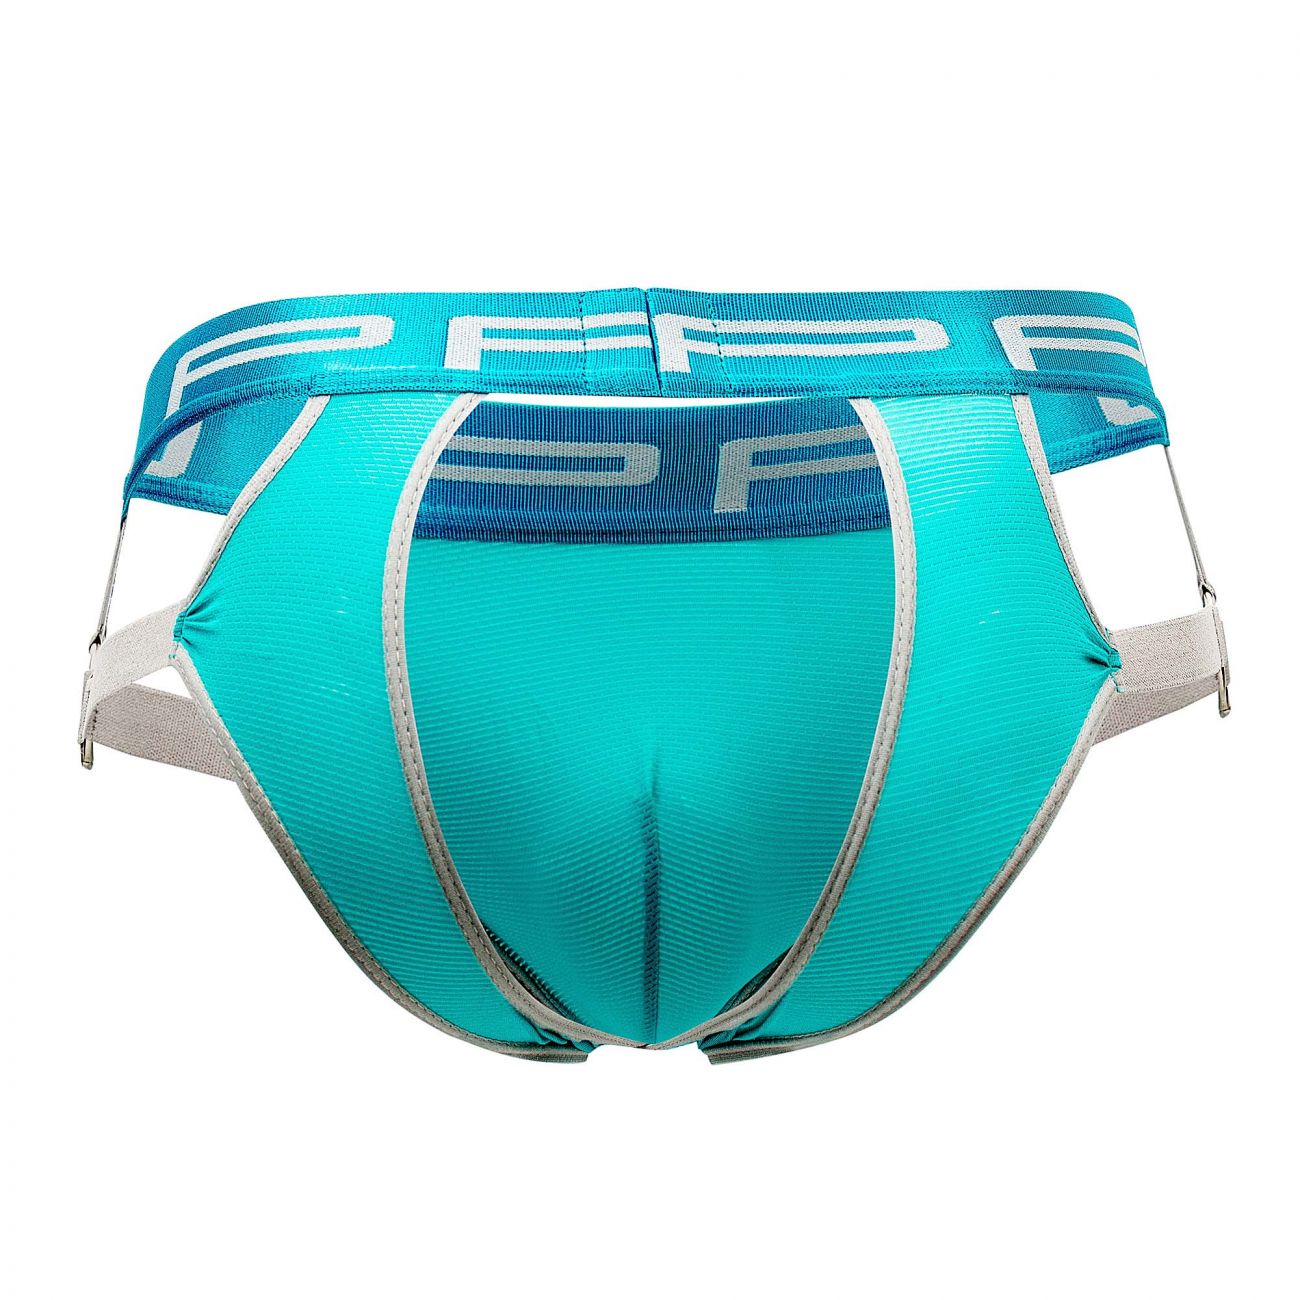 Mens Underwear: PPU 2014 Jockstrap | eBay